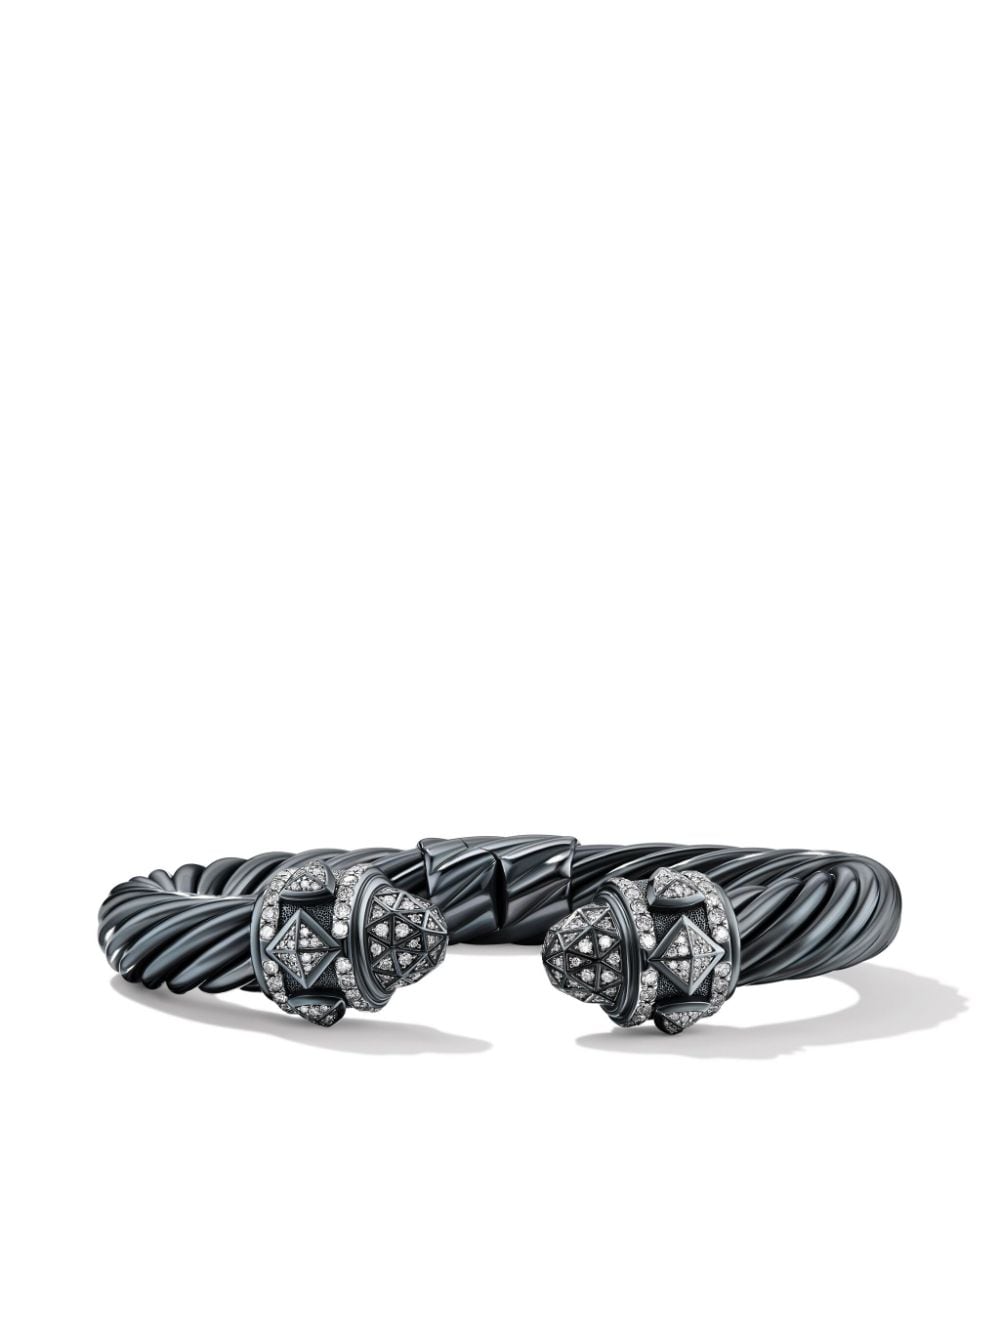 David Yurman Women's Renaissance Bracelet In Blackened Sterling Silver With Pavé Diamonds